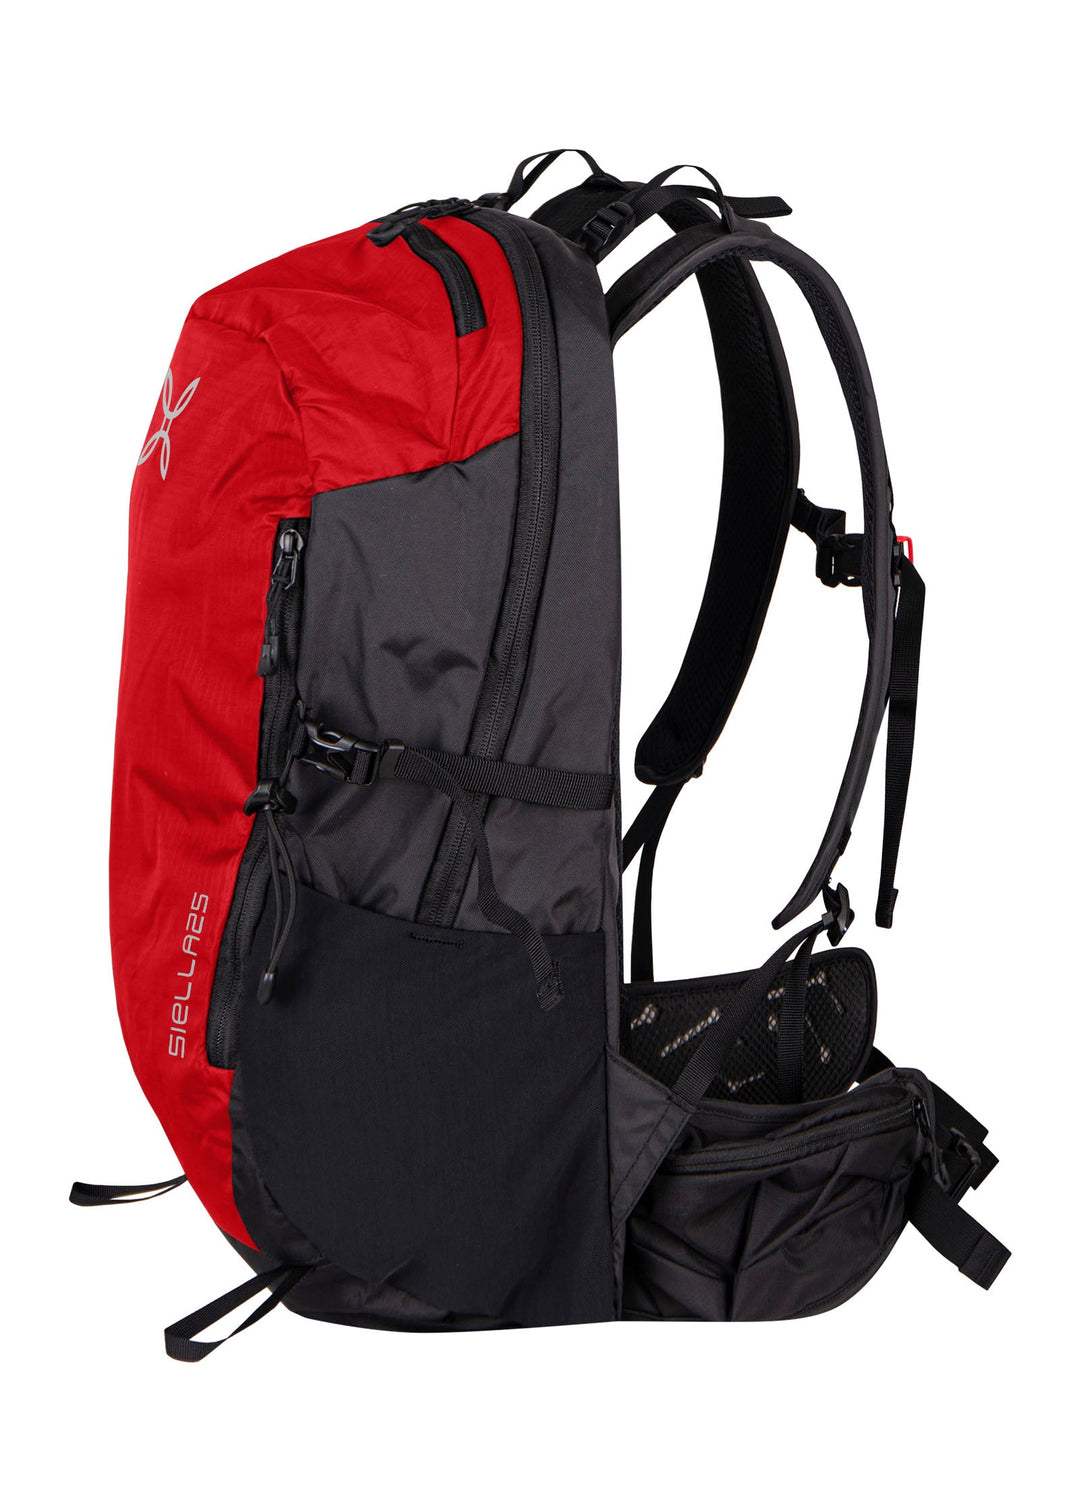 Siella 25 Backpack - Rosso (10) - Blogside